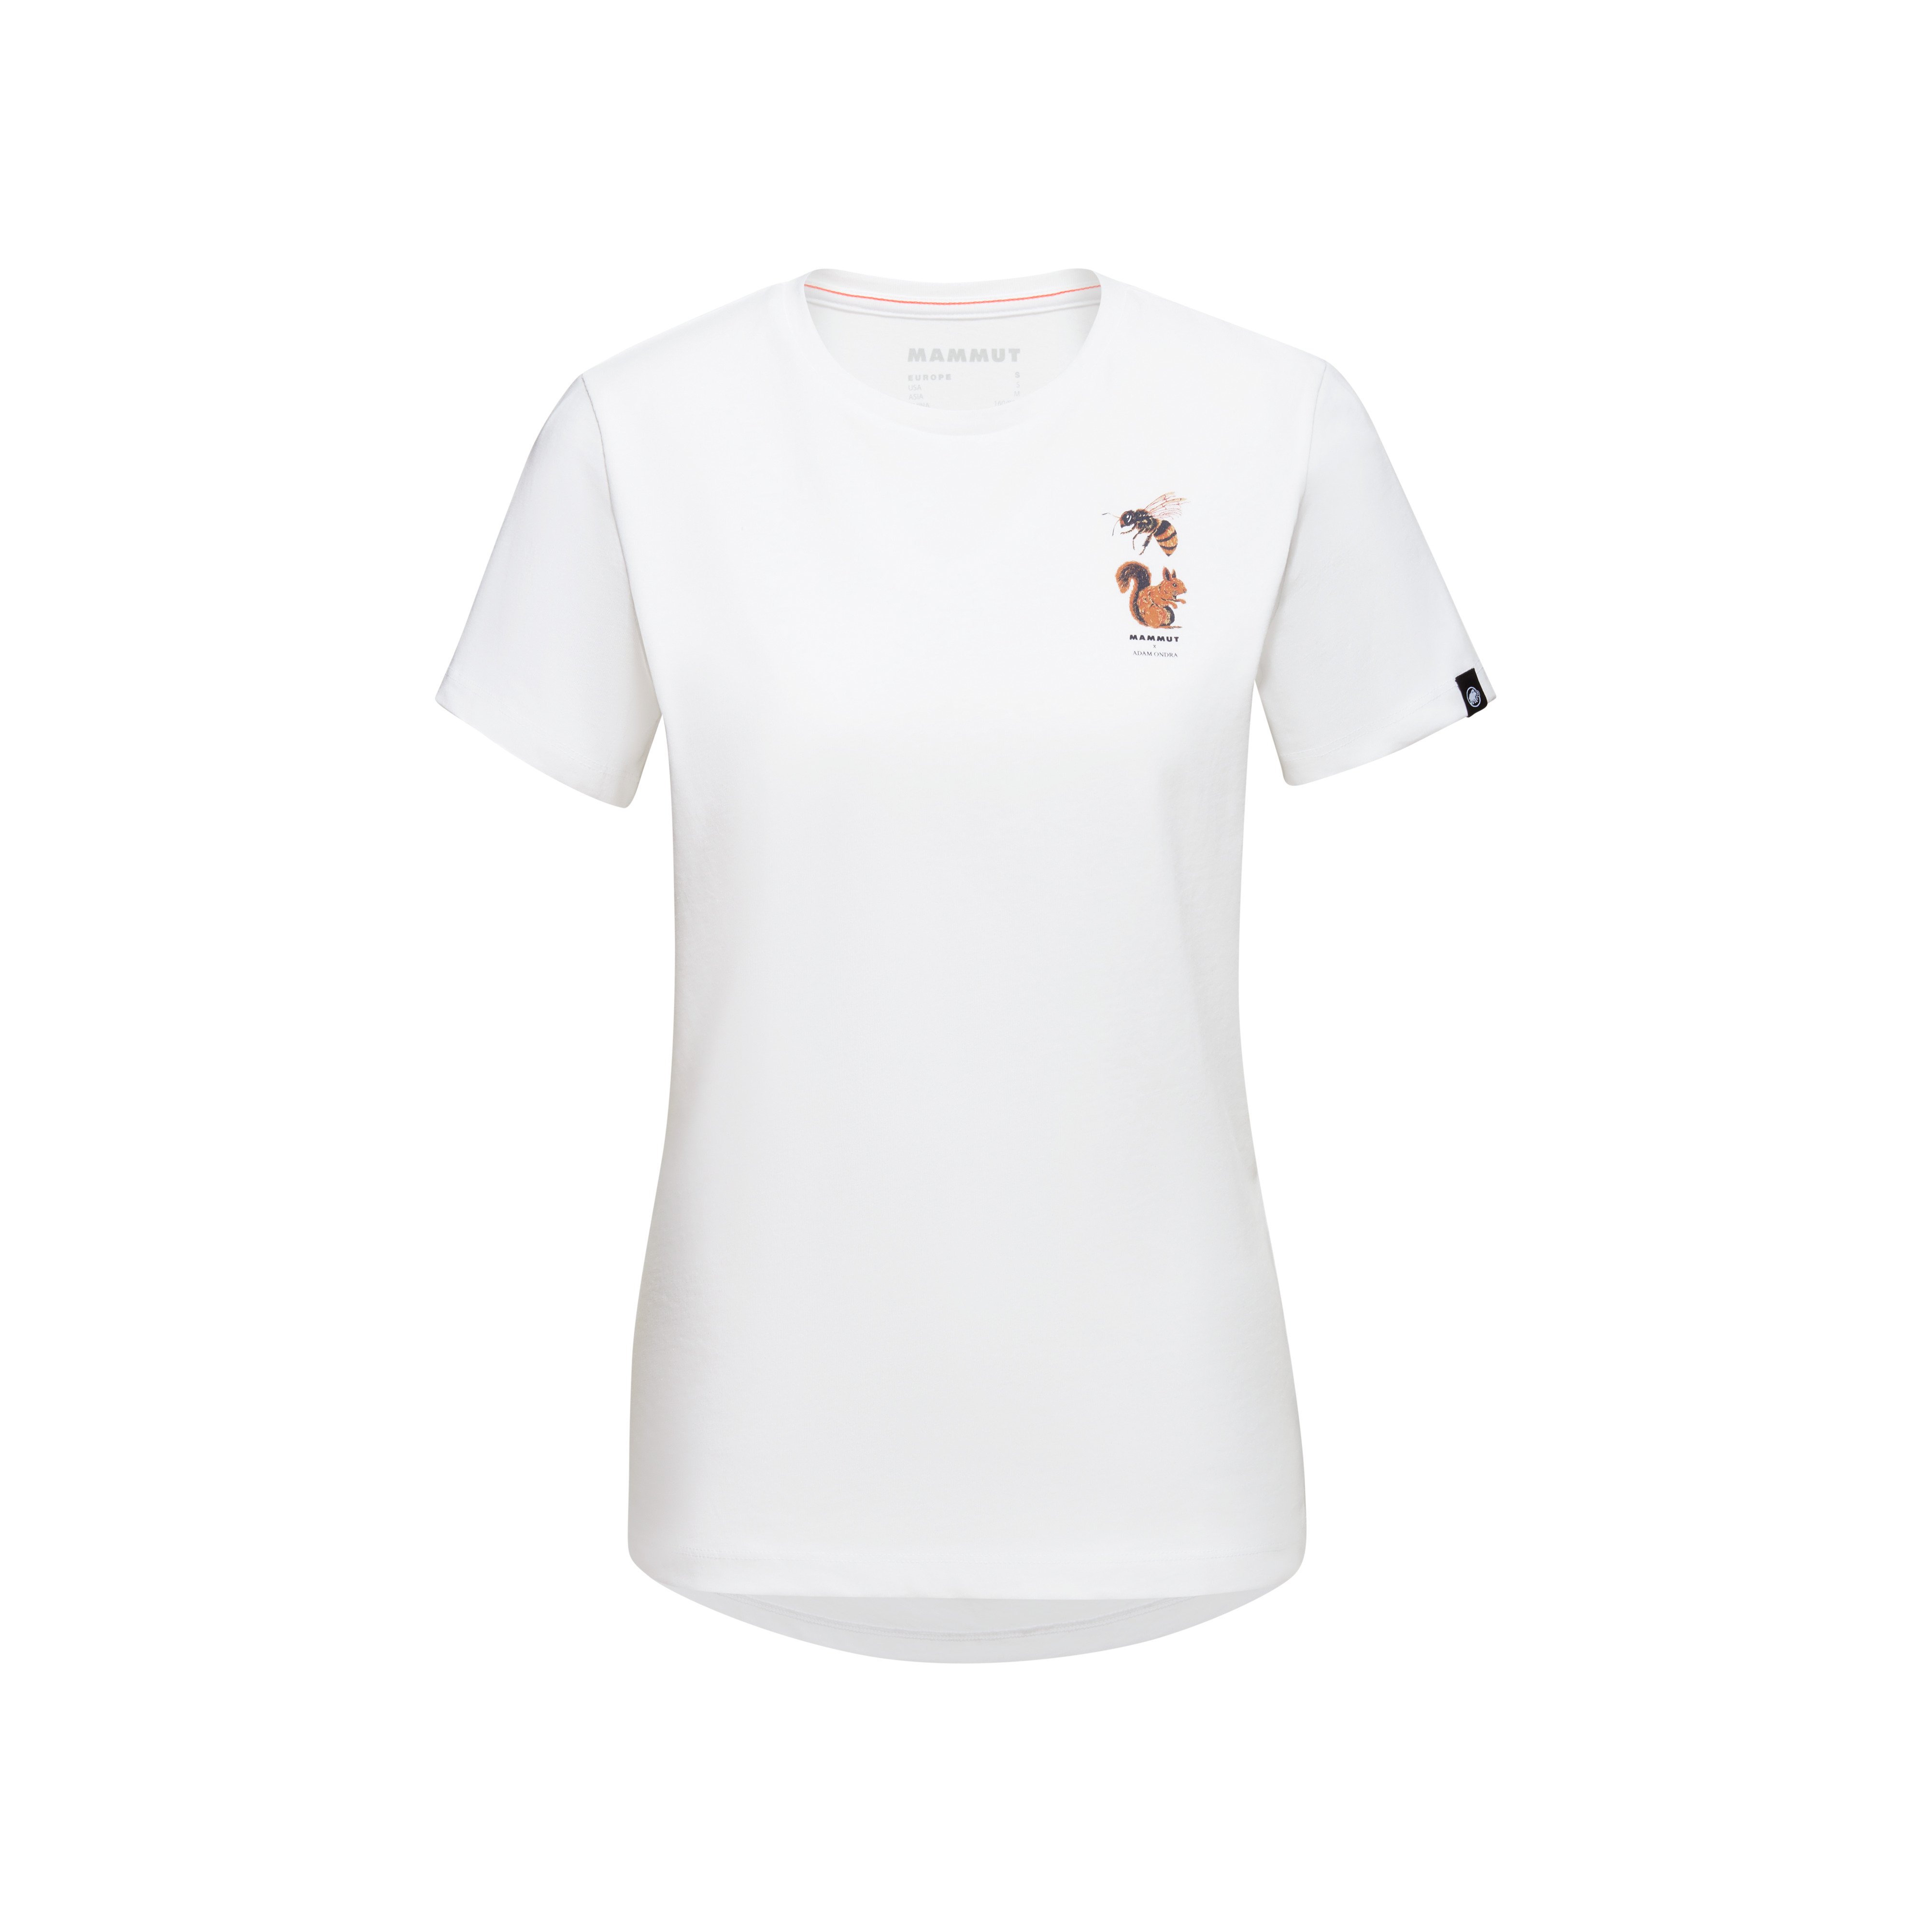 Mammut x Adam Ondra T-Shirt Women - white, XL thumbnail